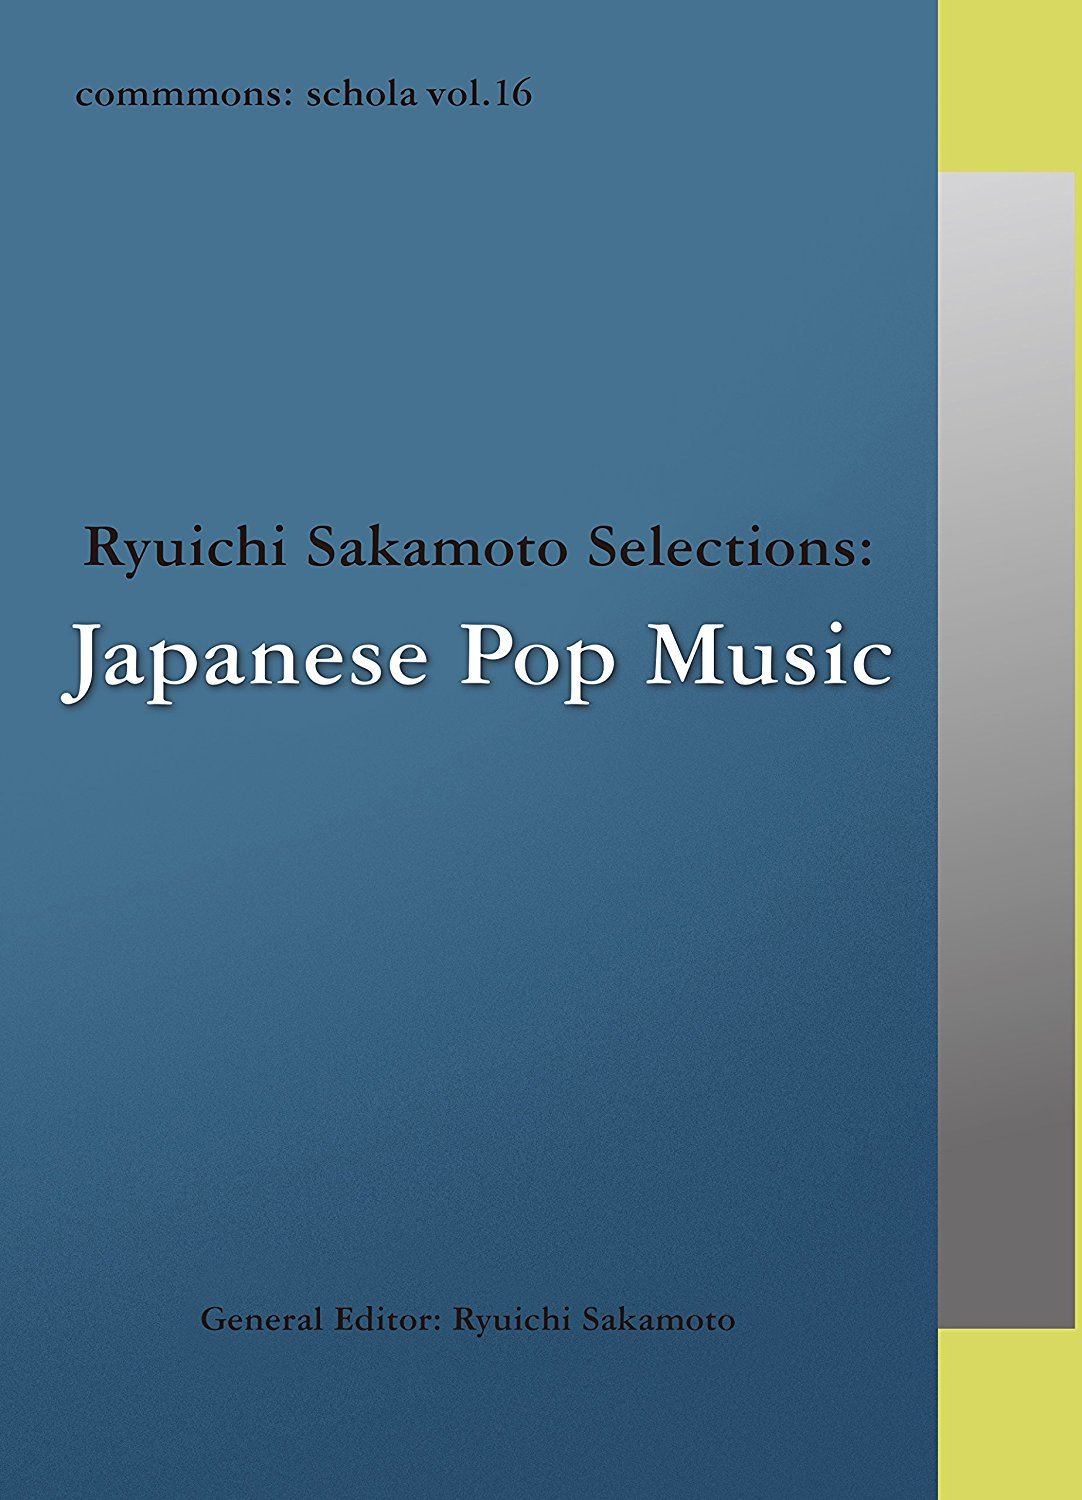 Commmons: Schola Vol.16 Ryuichi Sakamoto Selections: Japanese Pop